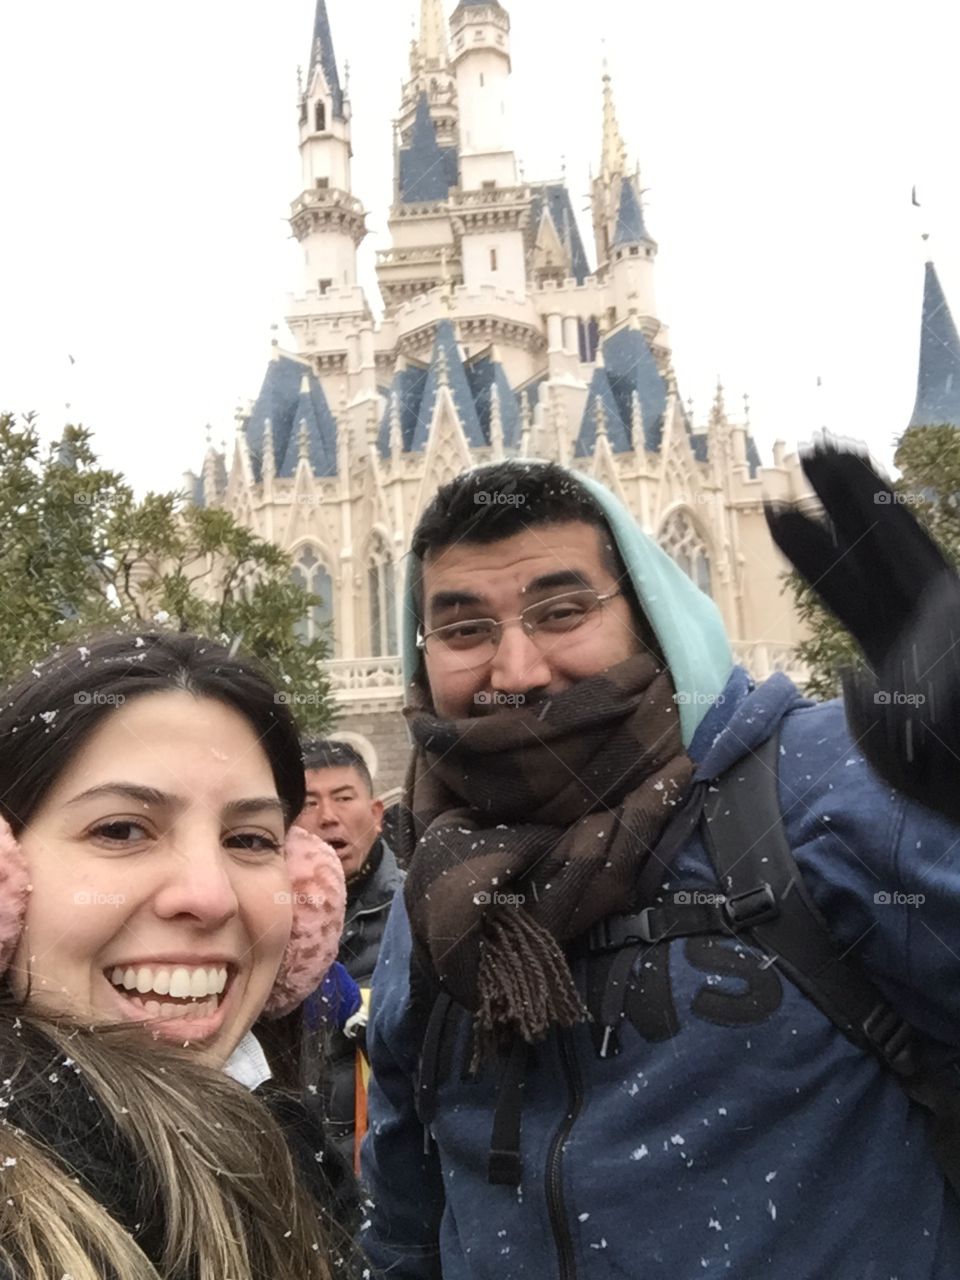 Winter + Disney + Snow = Dream